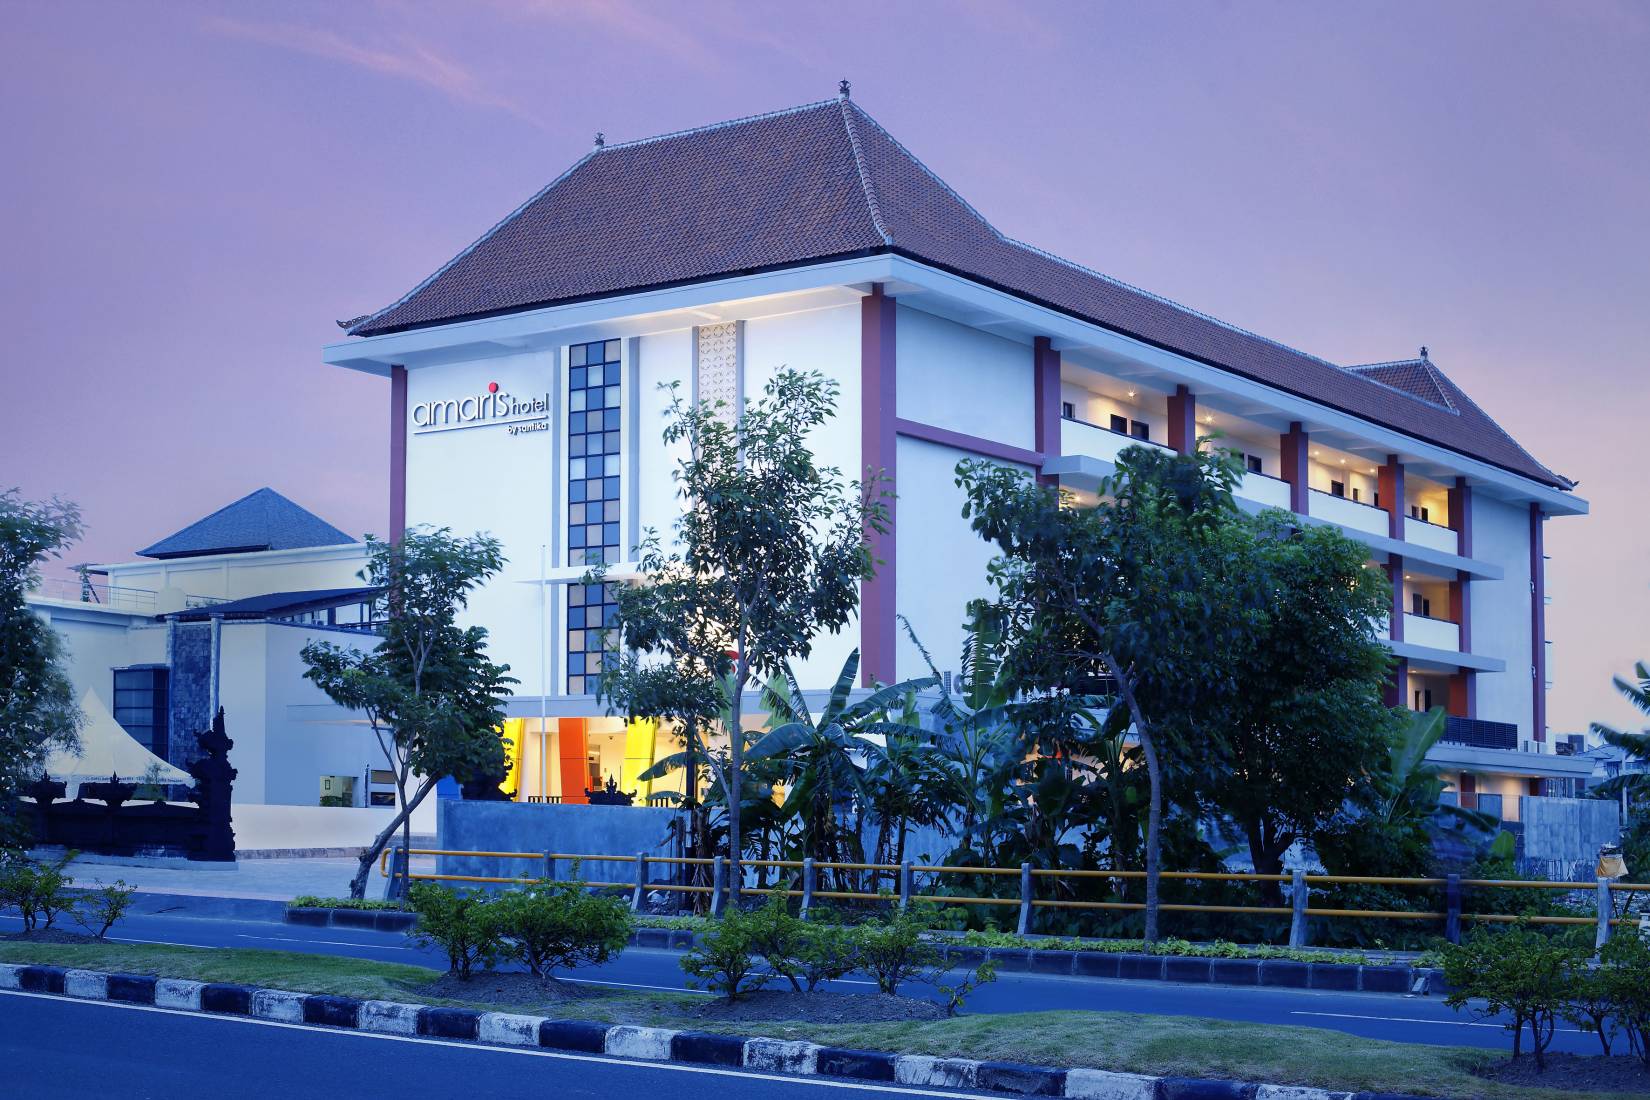 Amaris Hotel Sunset Road - Bali - Official Amaris Hotel website